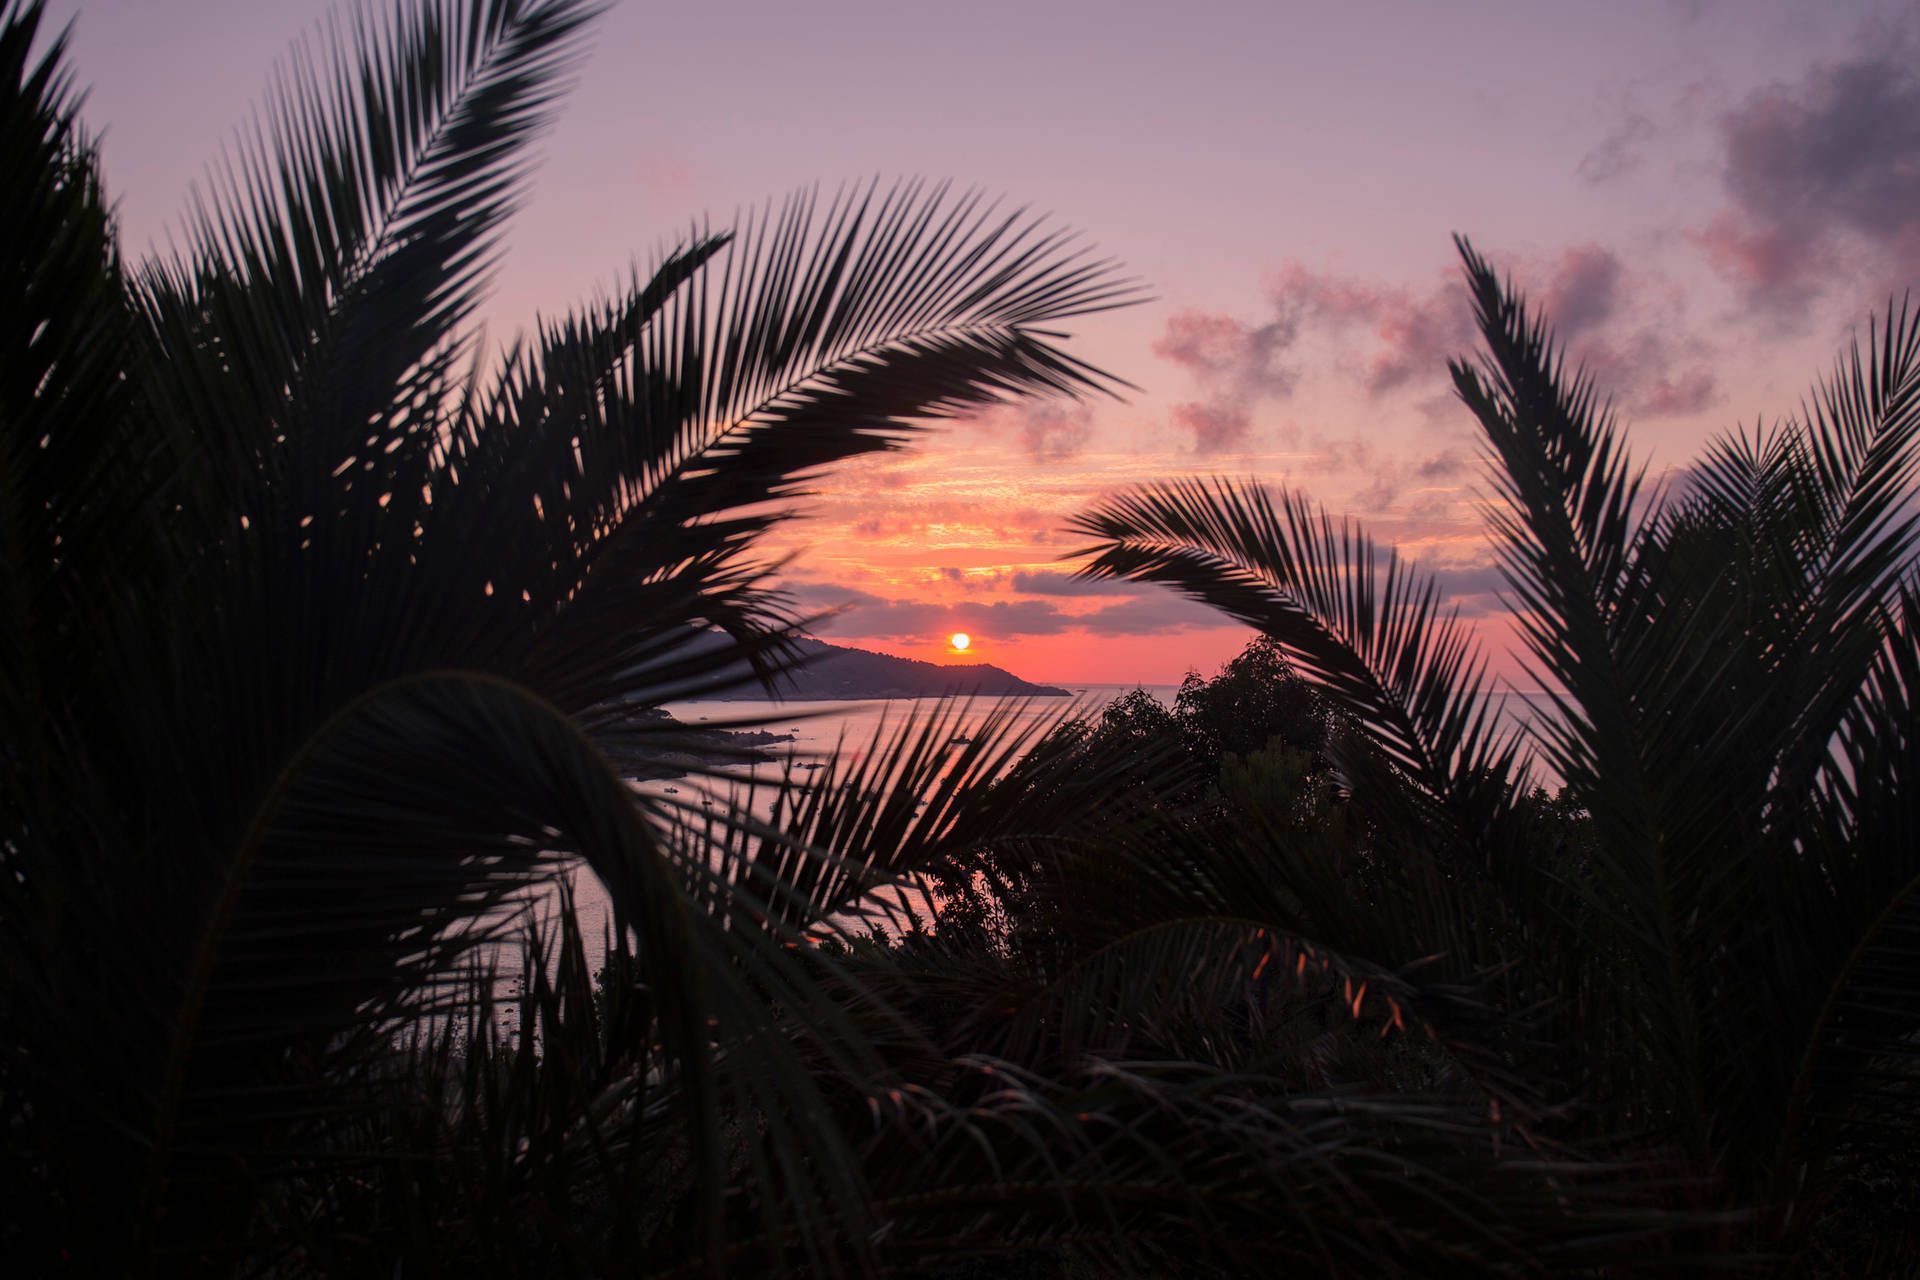 A sunset is seen through palm trees - Sunset, computer